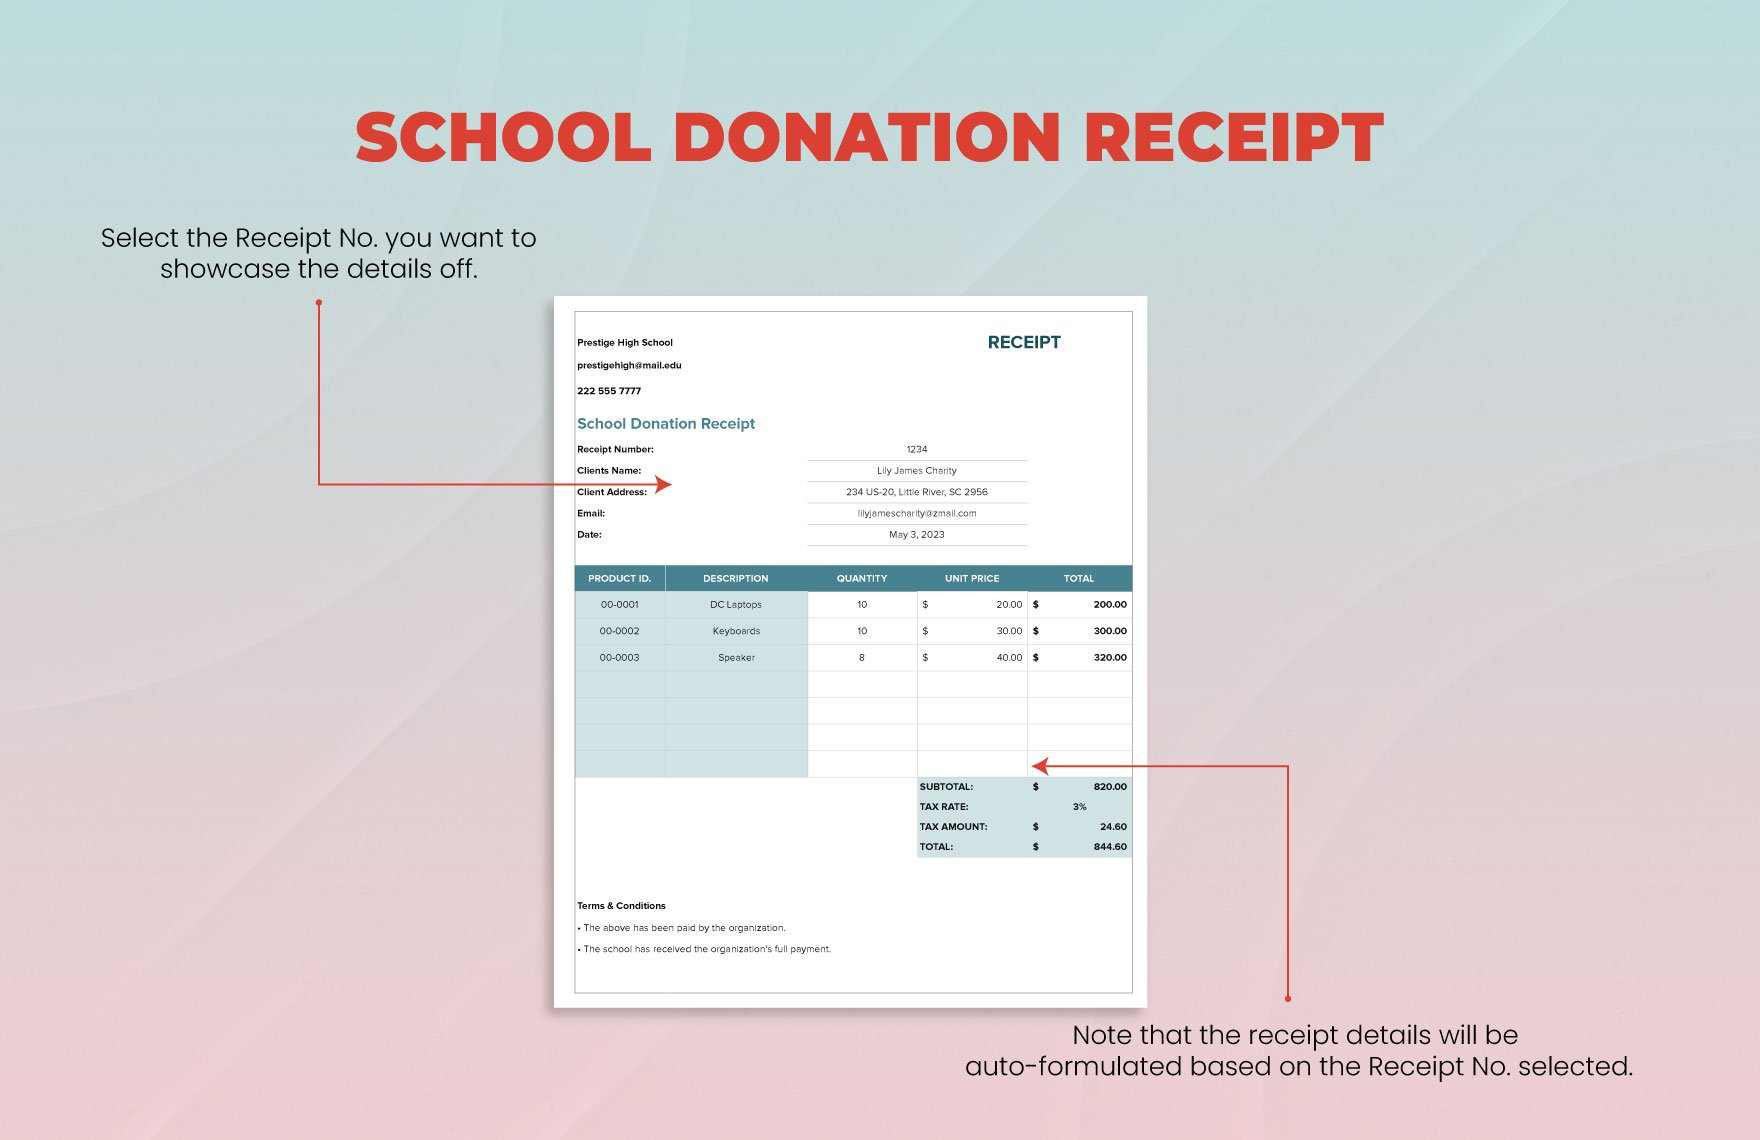 School Donation Receipt Template